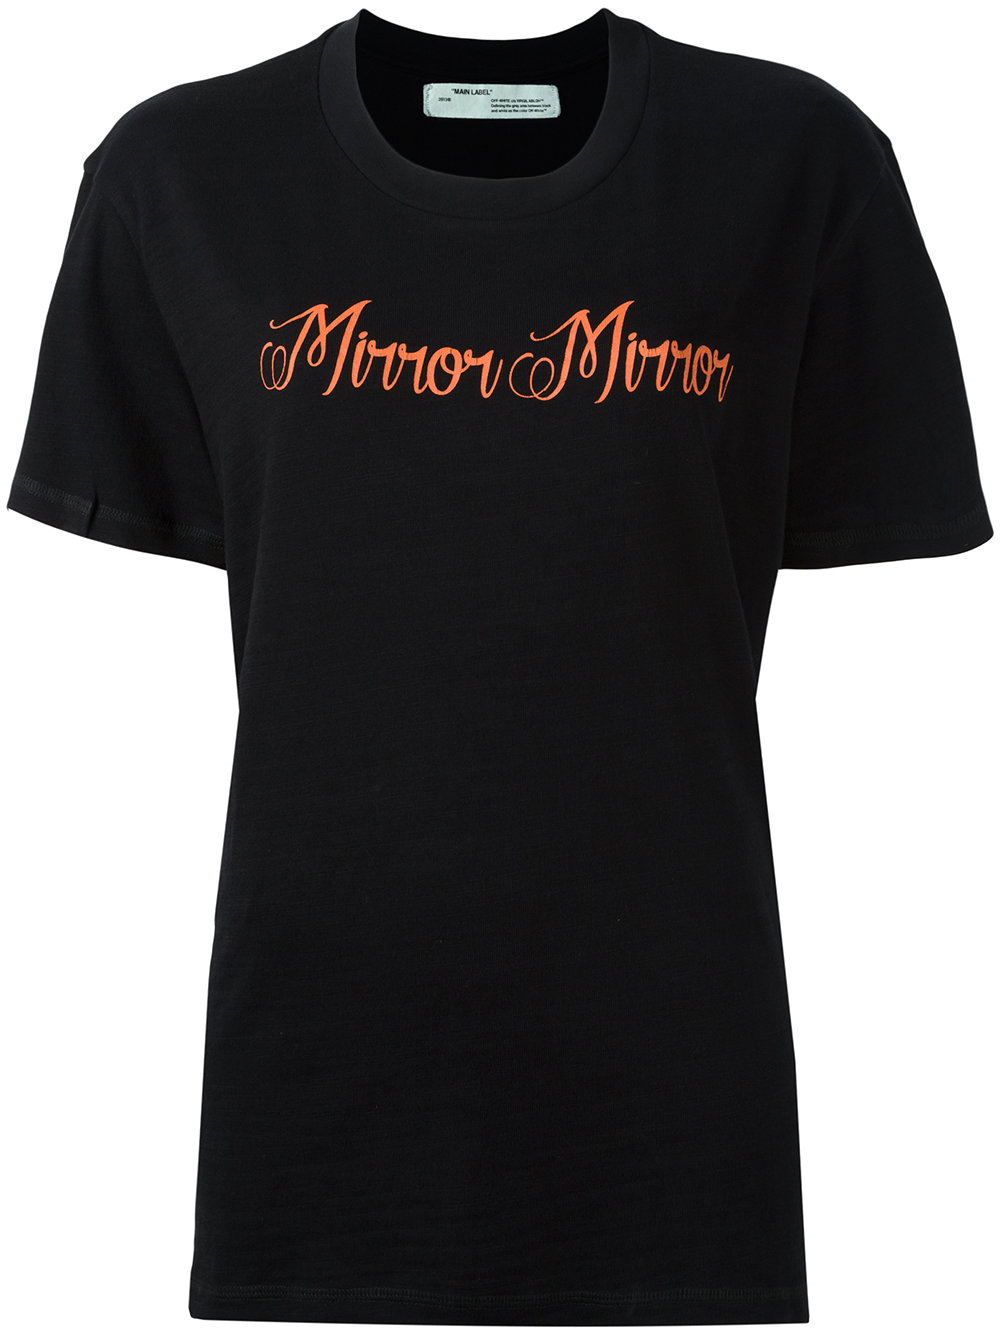 Off-White \'mirror mirror\' print T-shirt Cheap Sale 1019 BLACK Women Clothing T-shirts & Jerseys